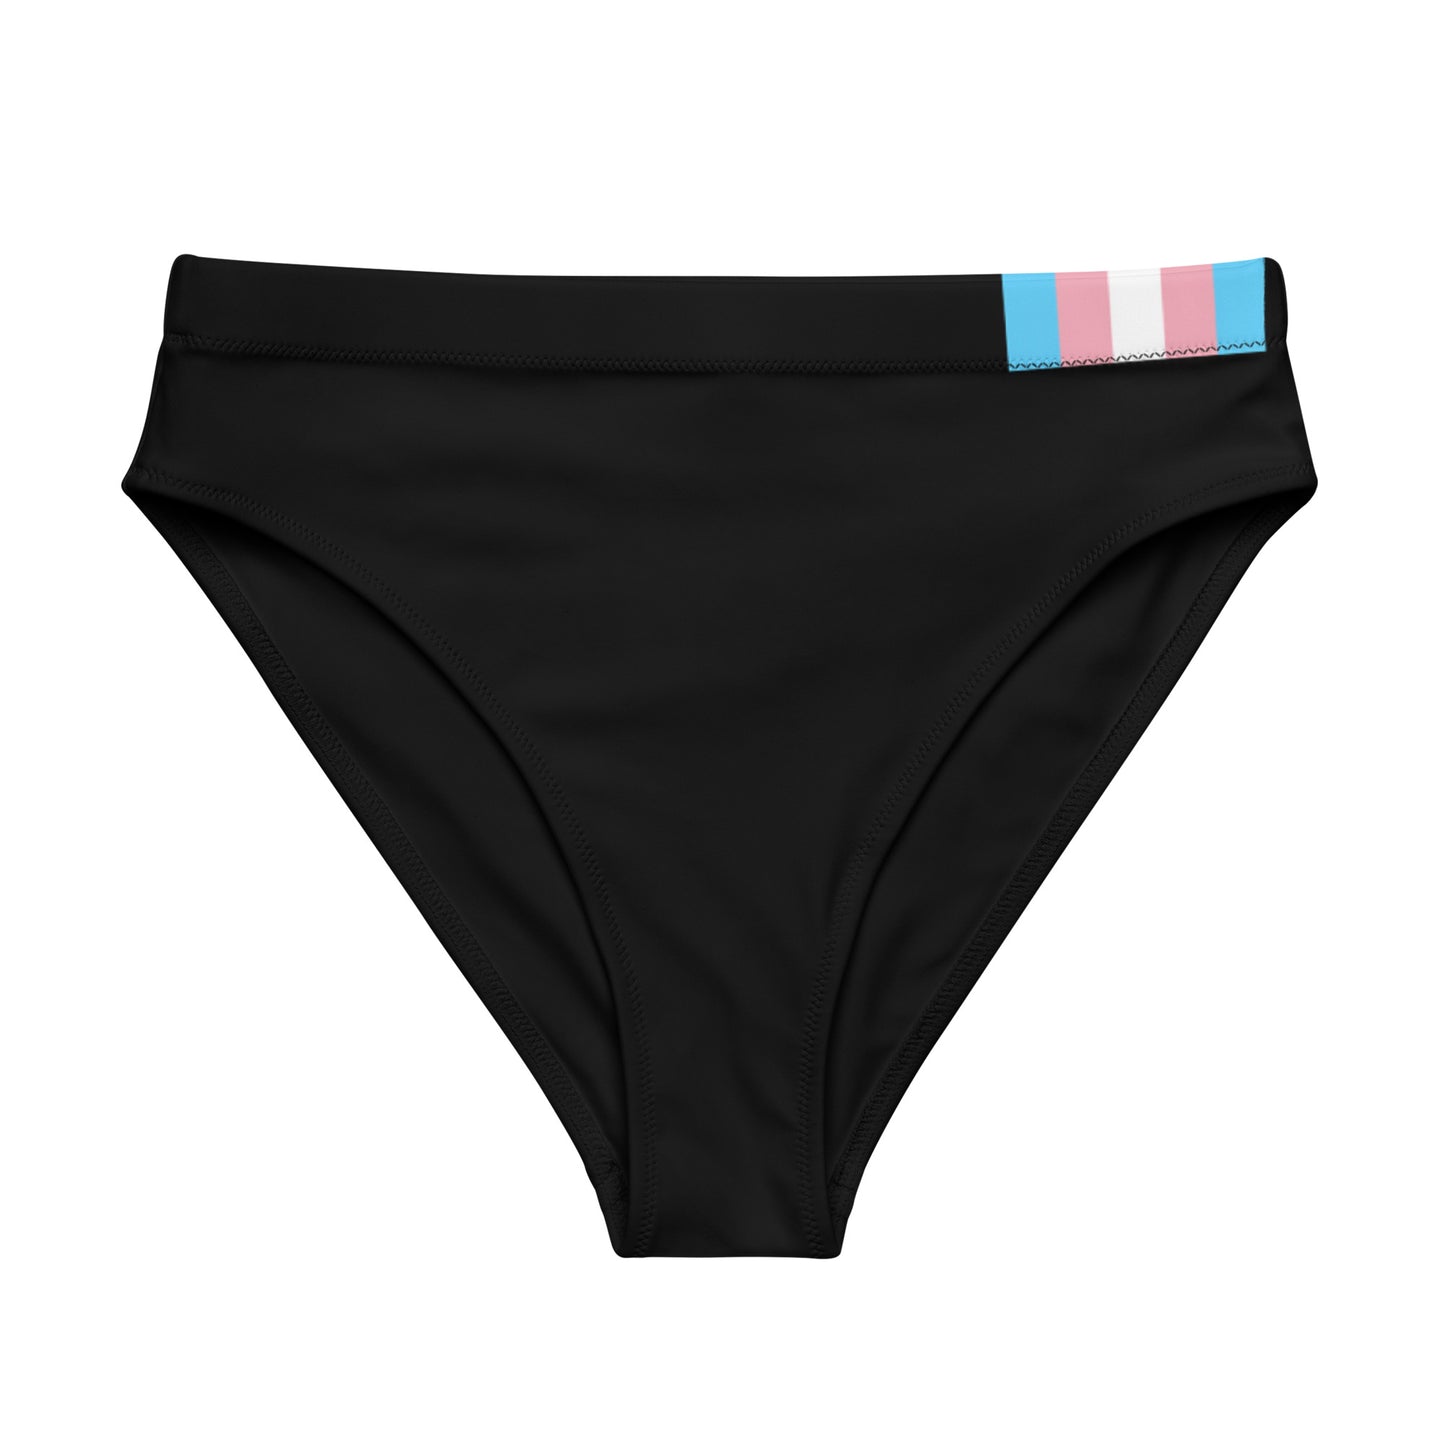 Plus Size Blue Pink White Pride Tag Black High-Cut Tucking Panty